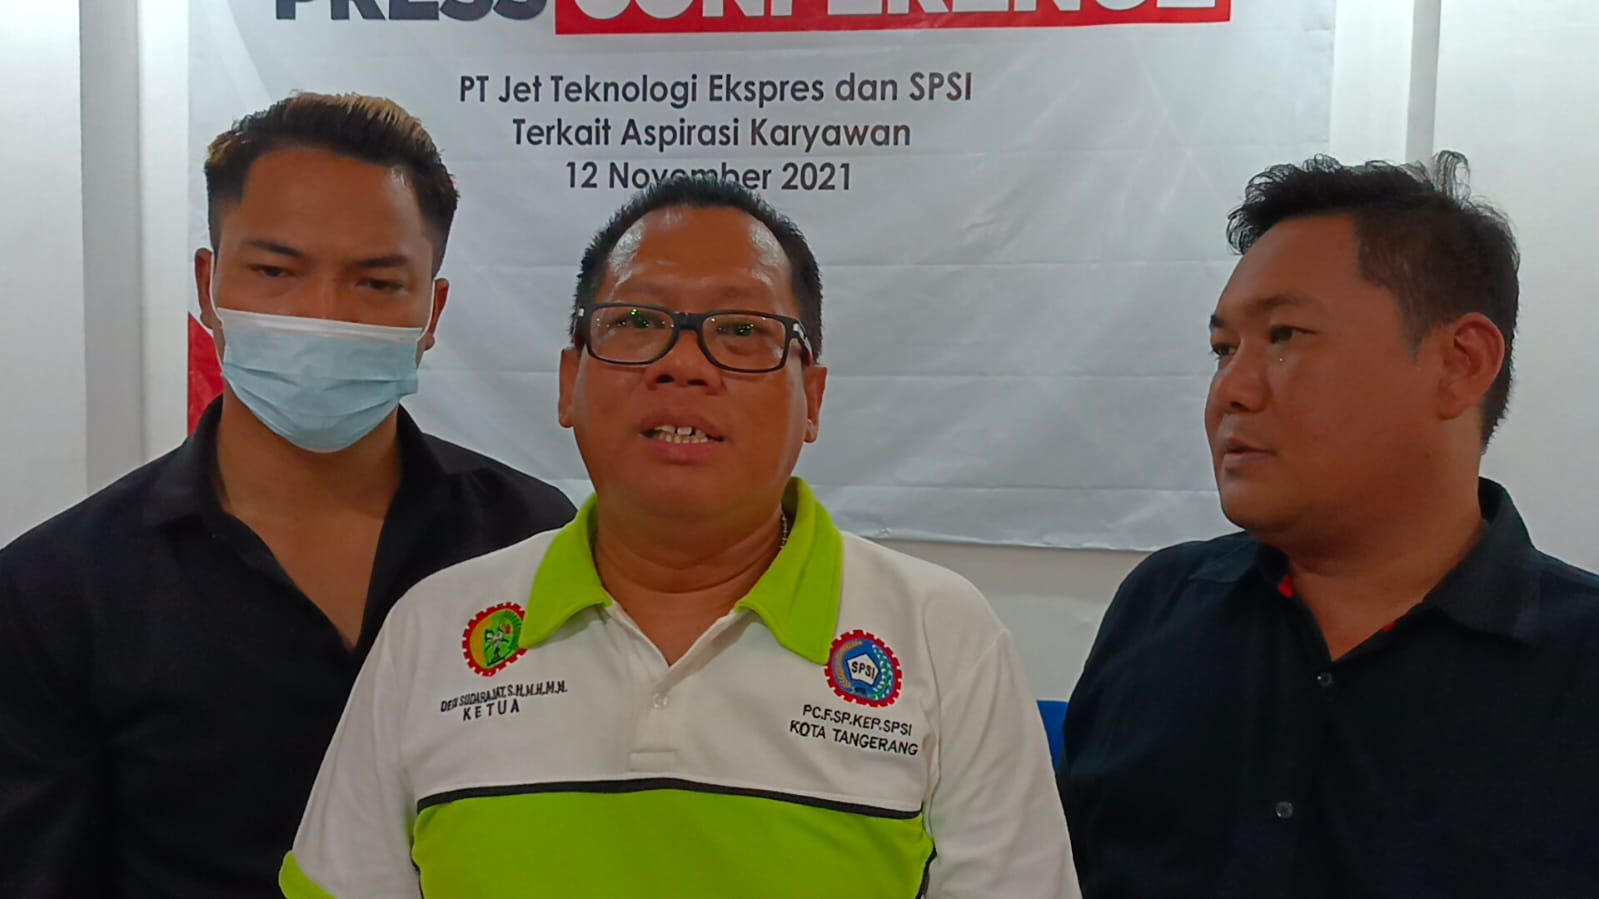 Jumpa pers manajemen J&T Ekspress dan KSPSI terkait kesalahpahaman dengan pekerja di Sekretariat KSPSI Kota Tangerang, Jumat 12 November 2021.